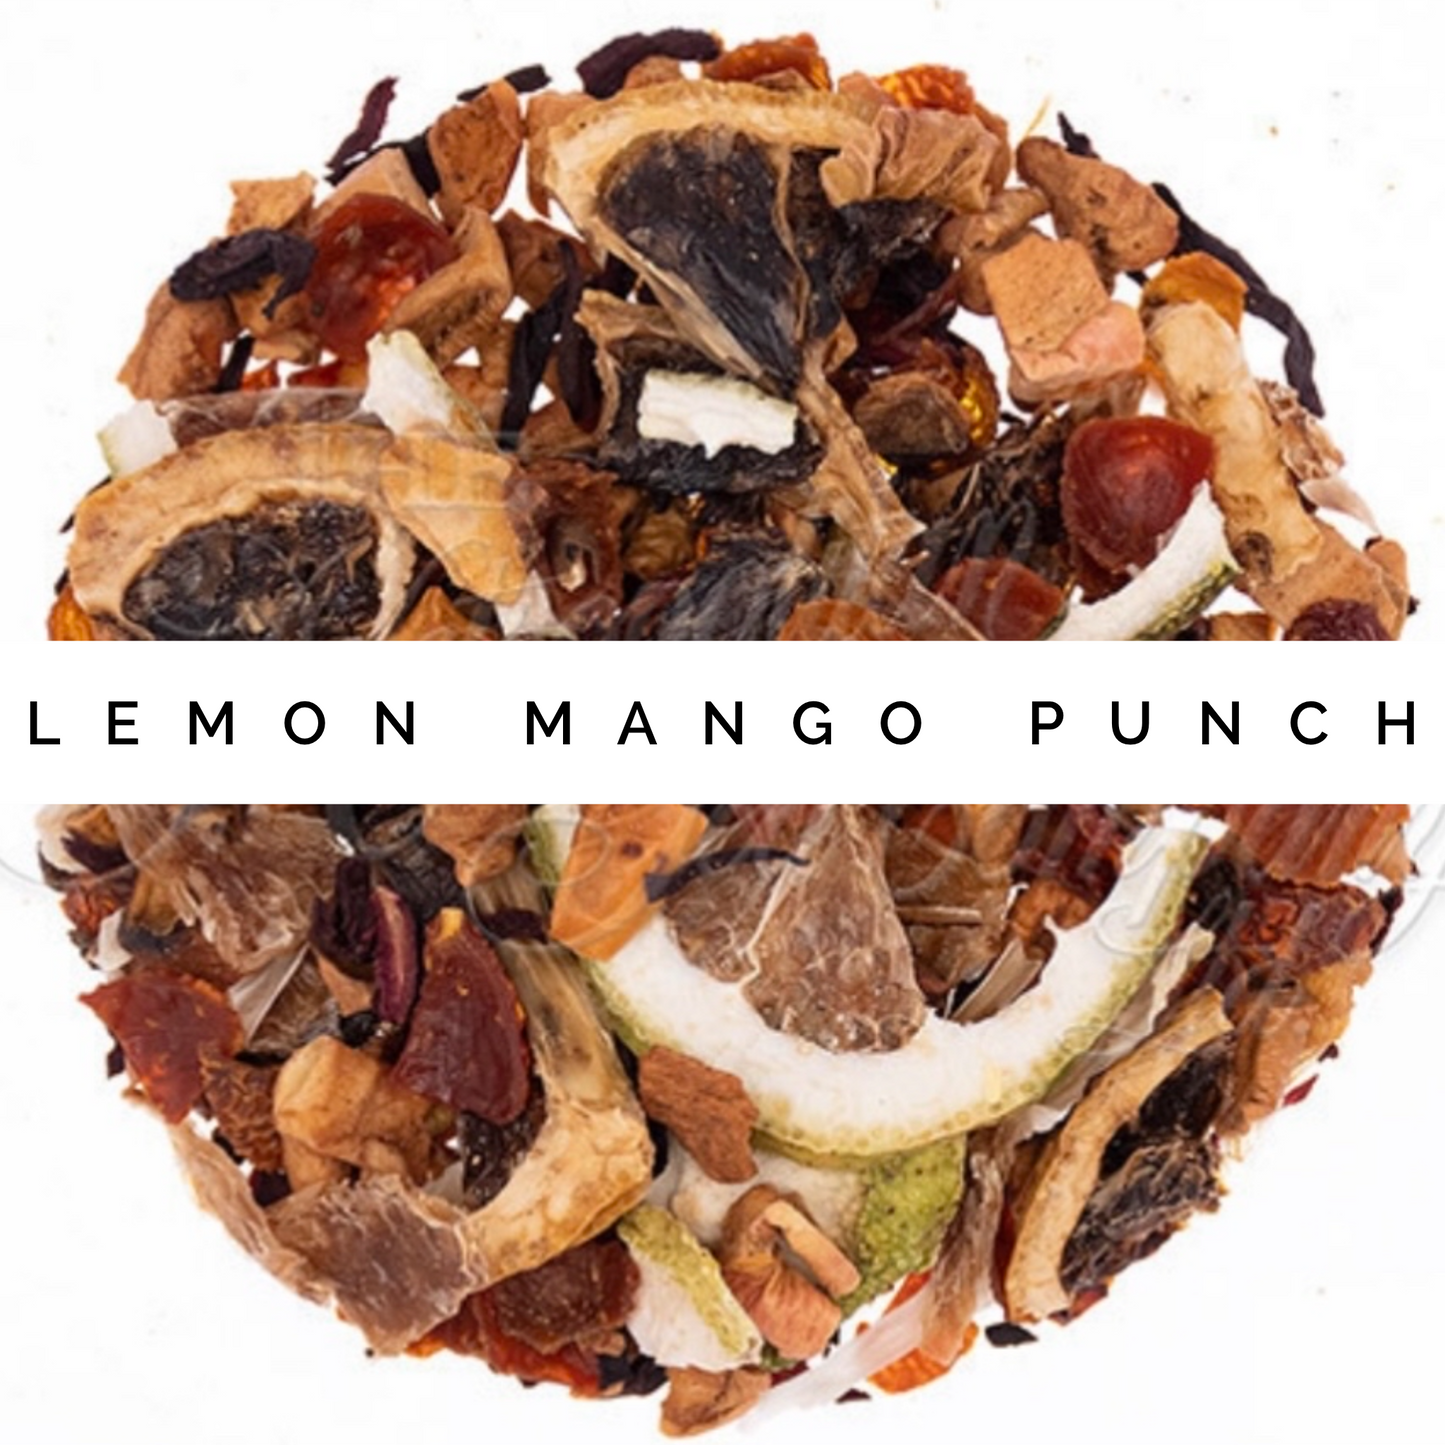 Lemon Mango Punch